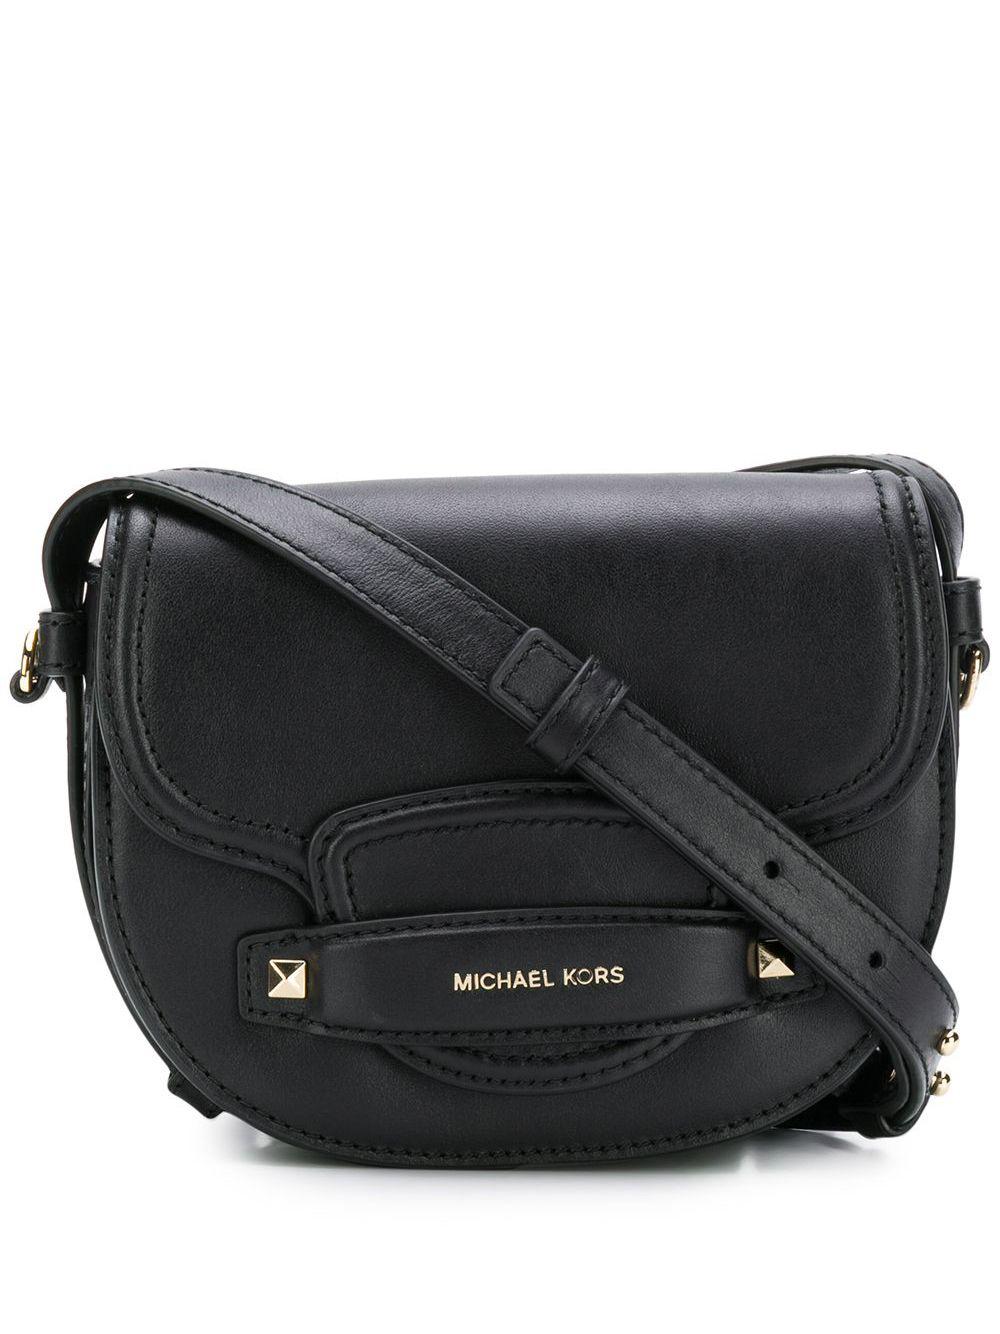 MICHAEL Michael Kors Leather Cary Mini Crossbody Bag in Black - Lyst